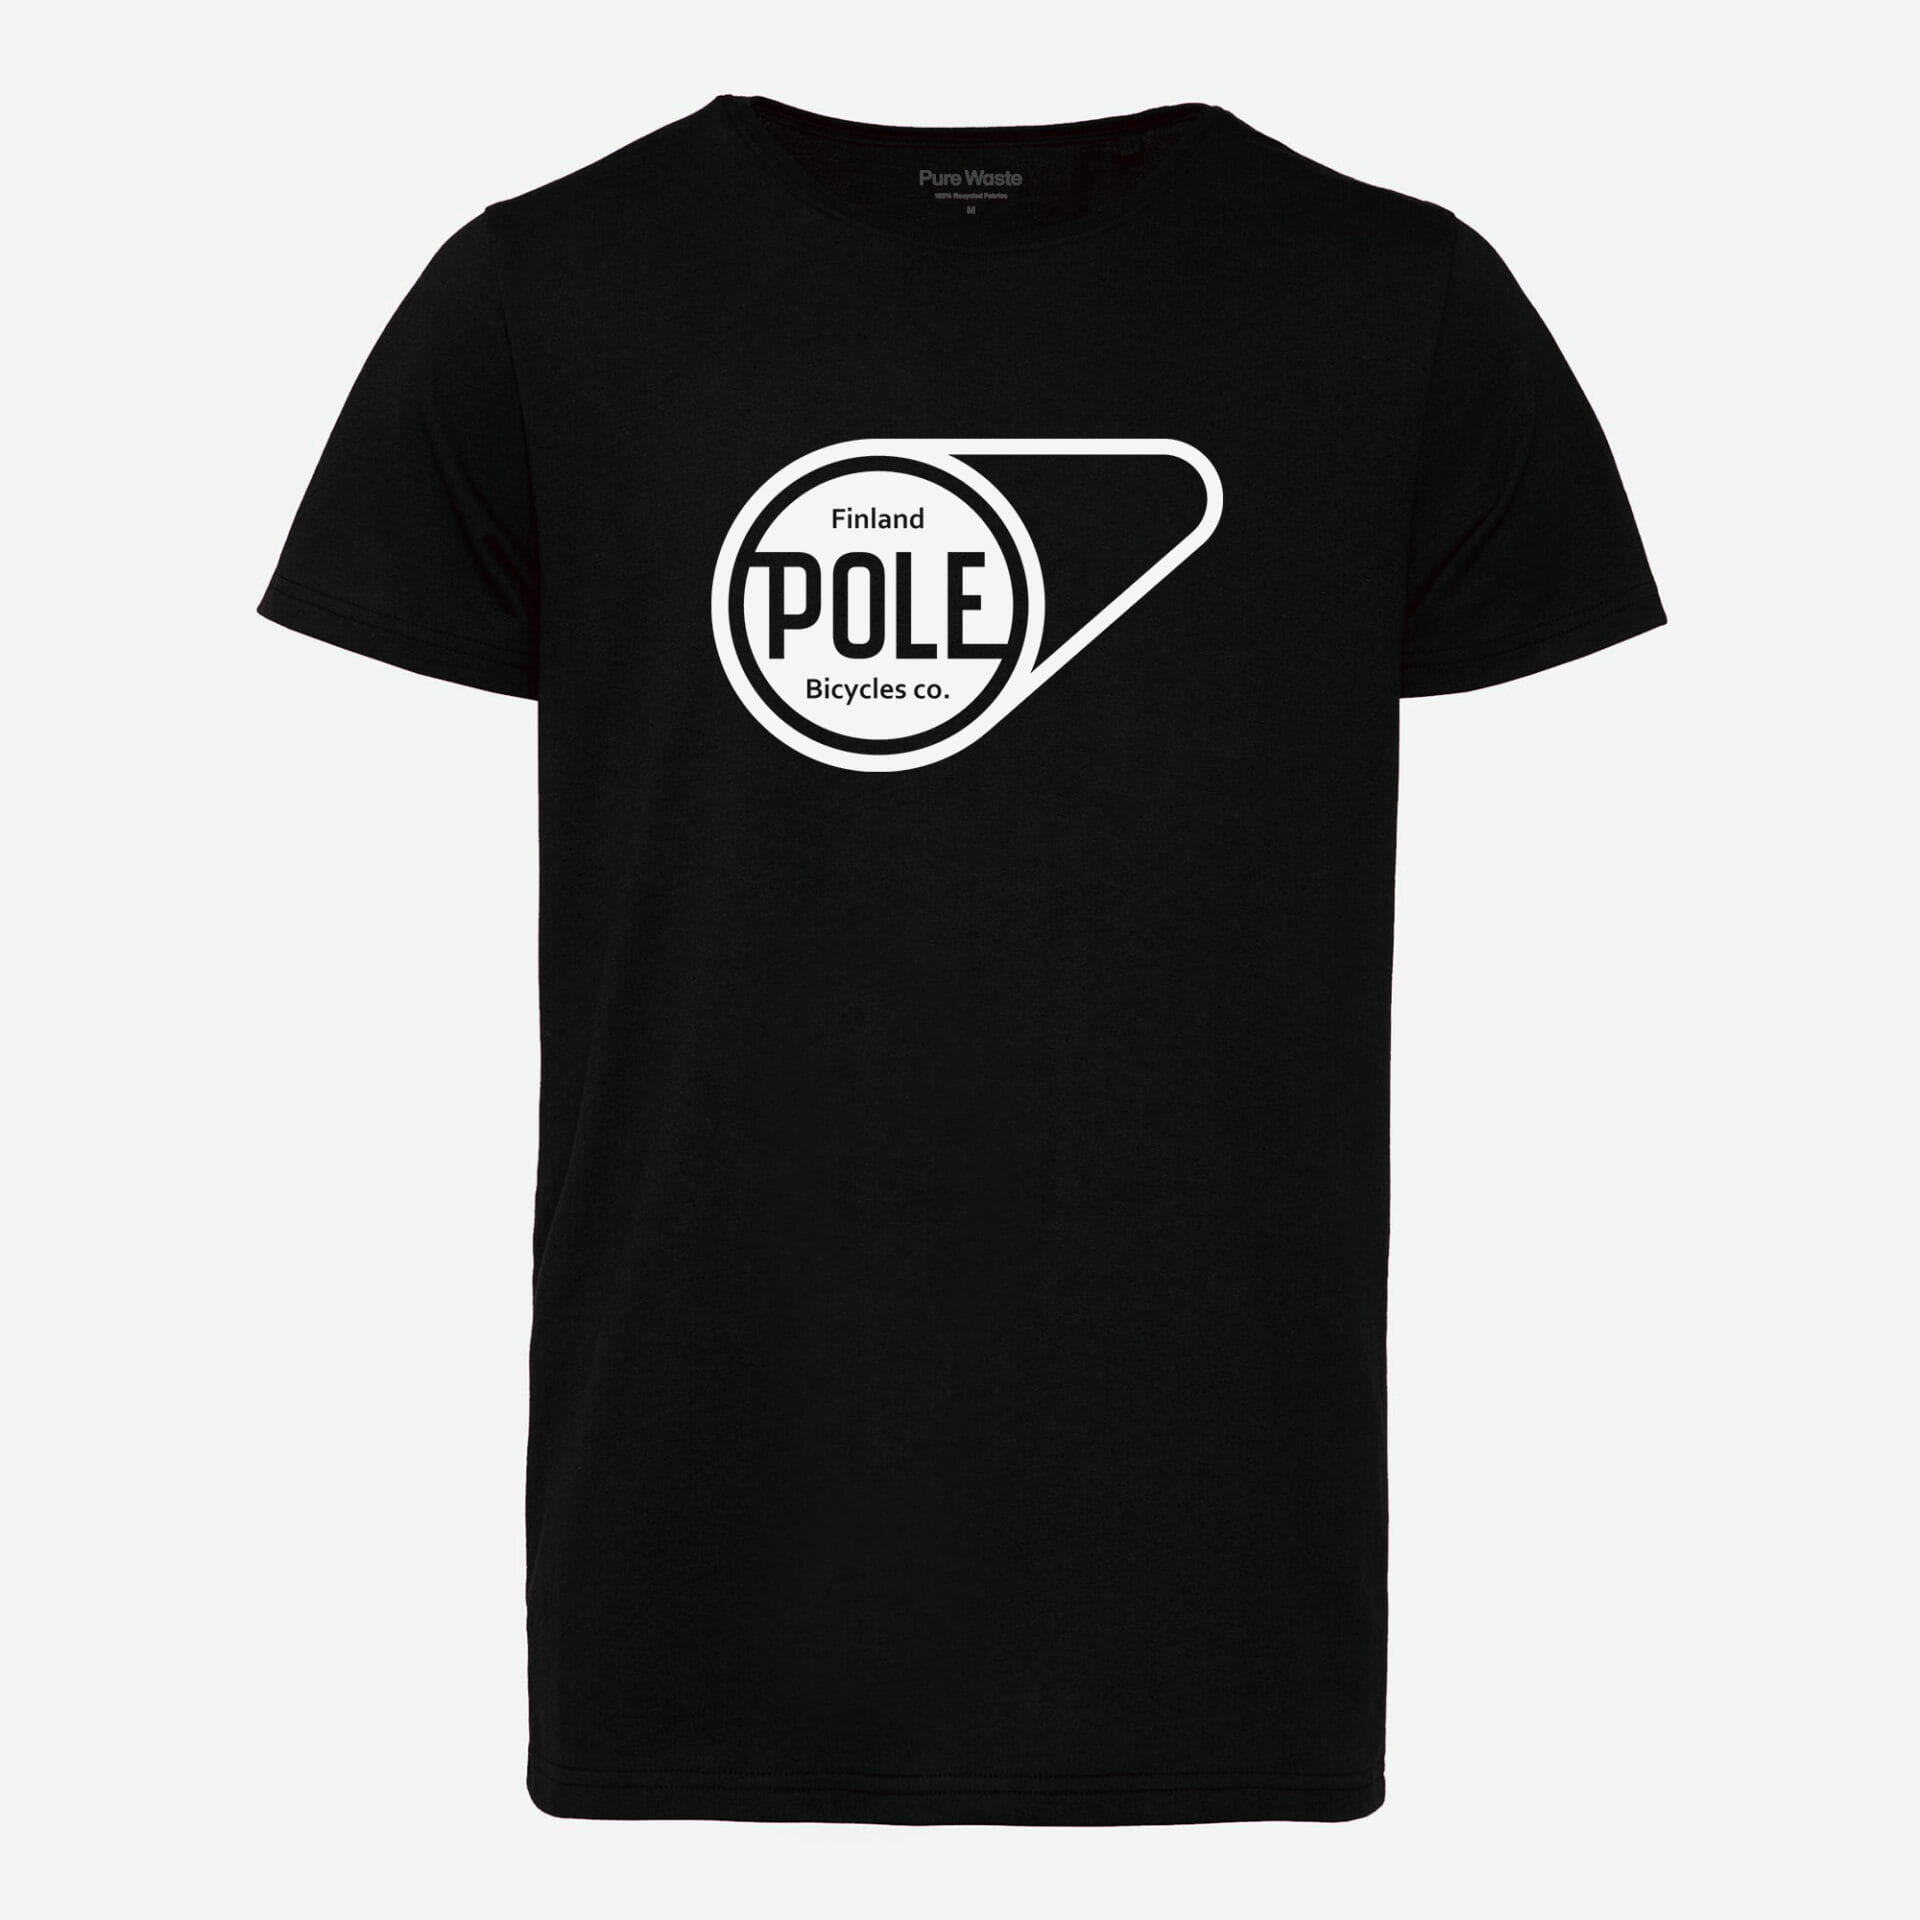 Pole_purewaste_t_shirt_black